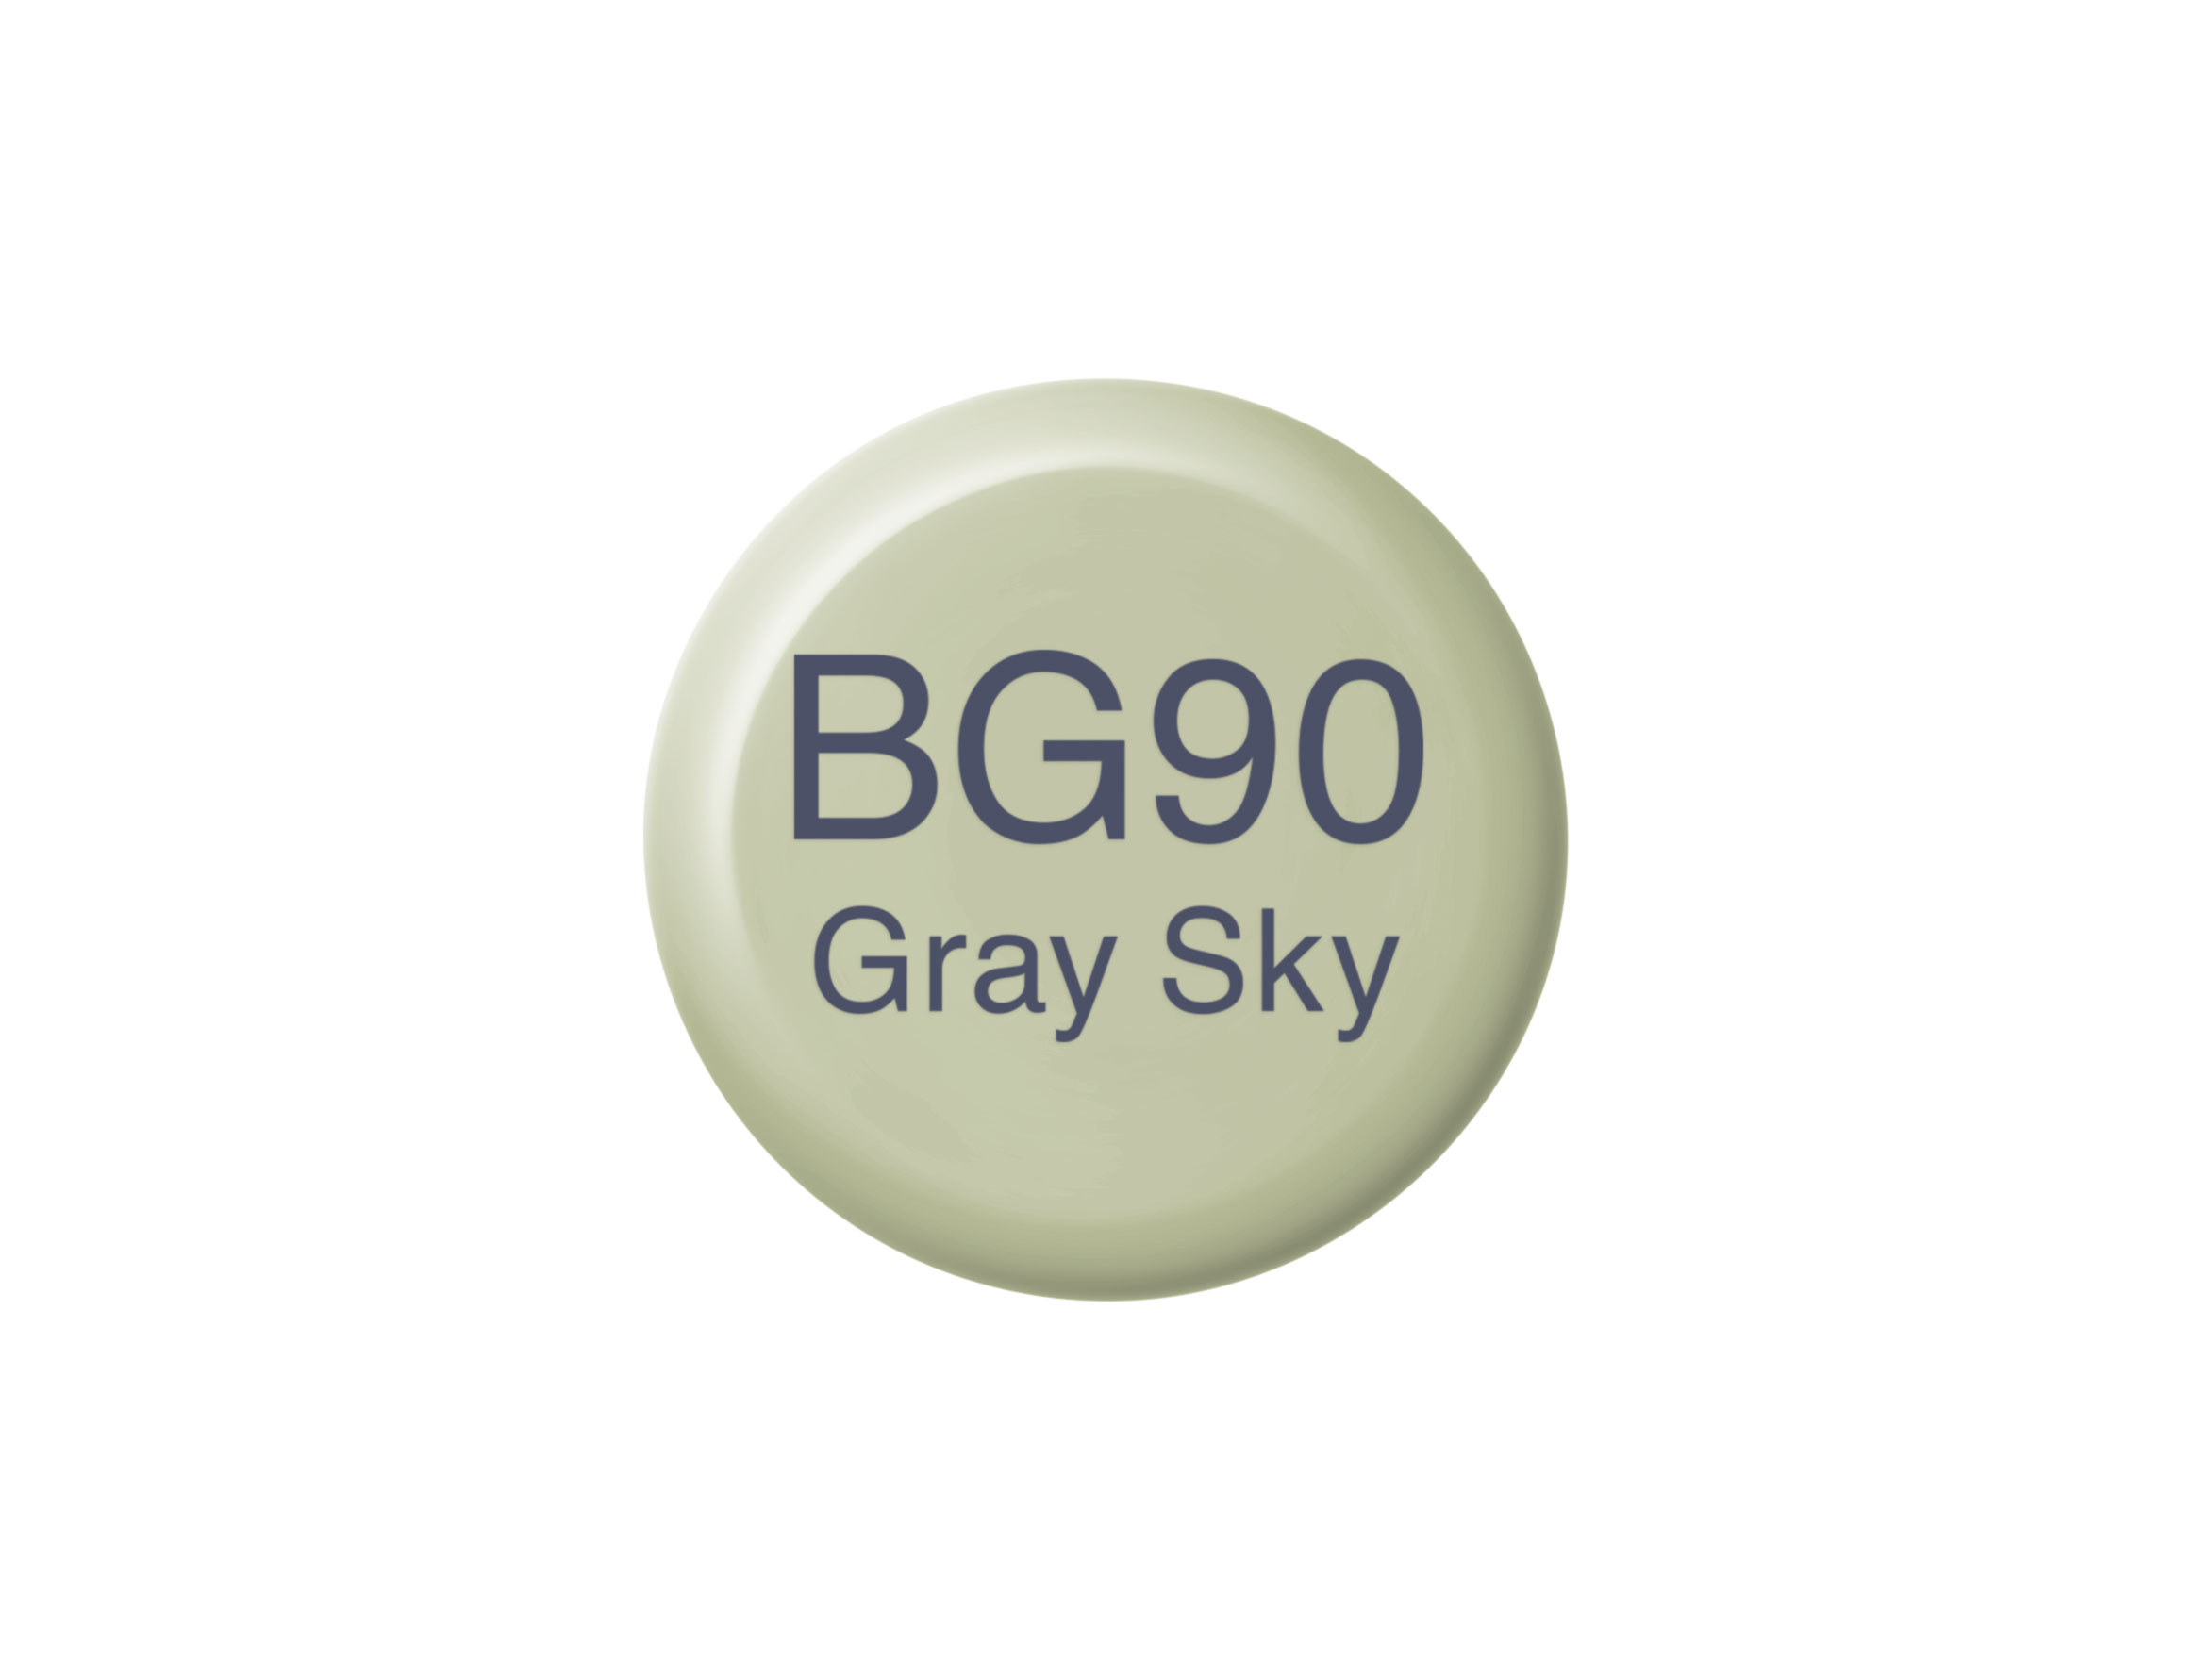 Copic Ink BG90 Gray Sky